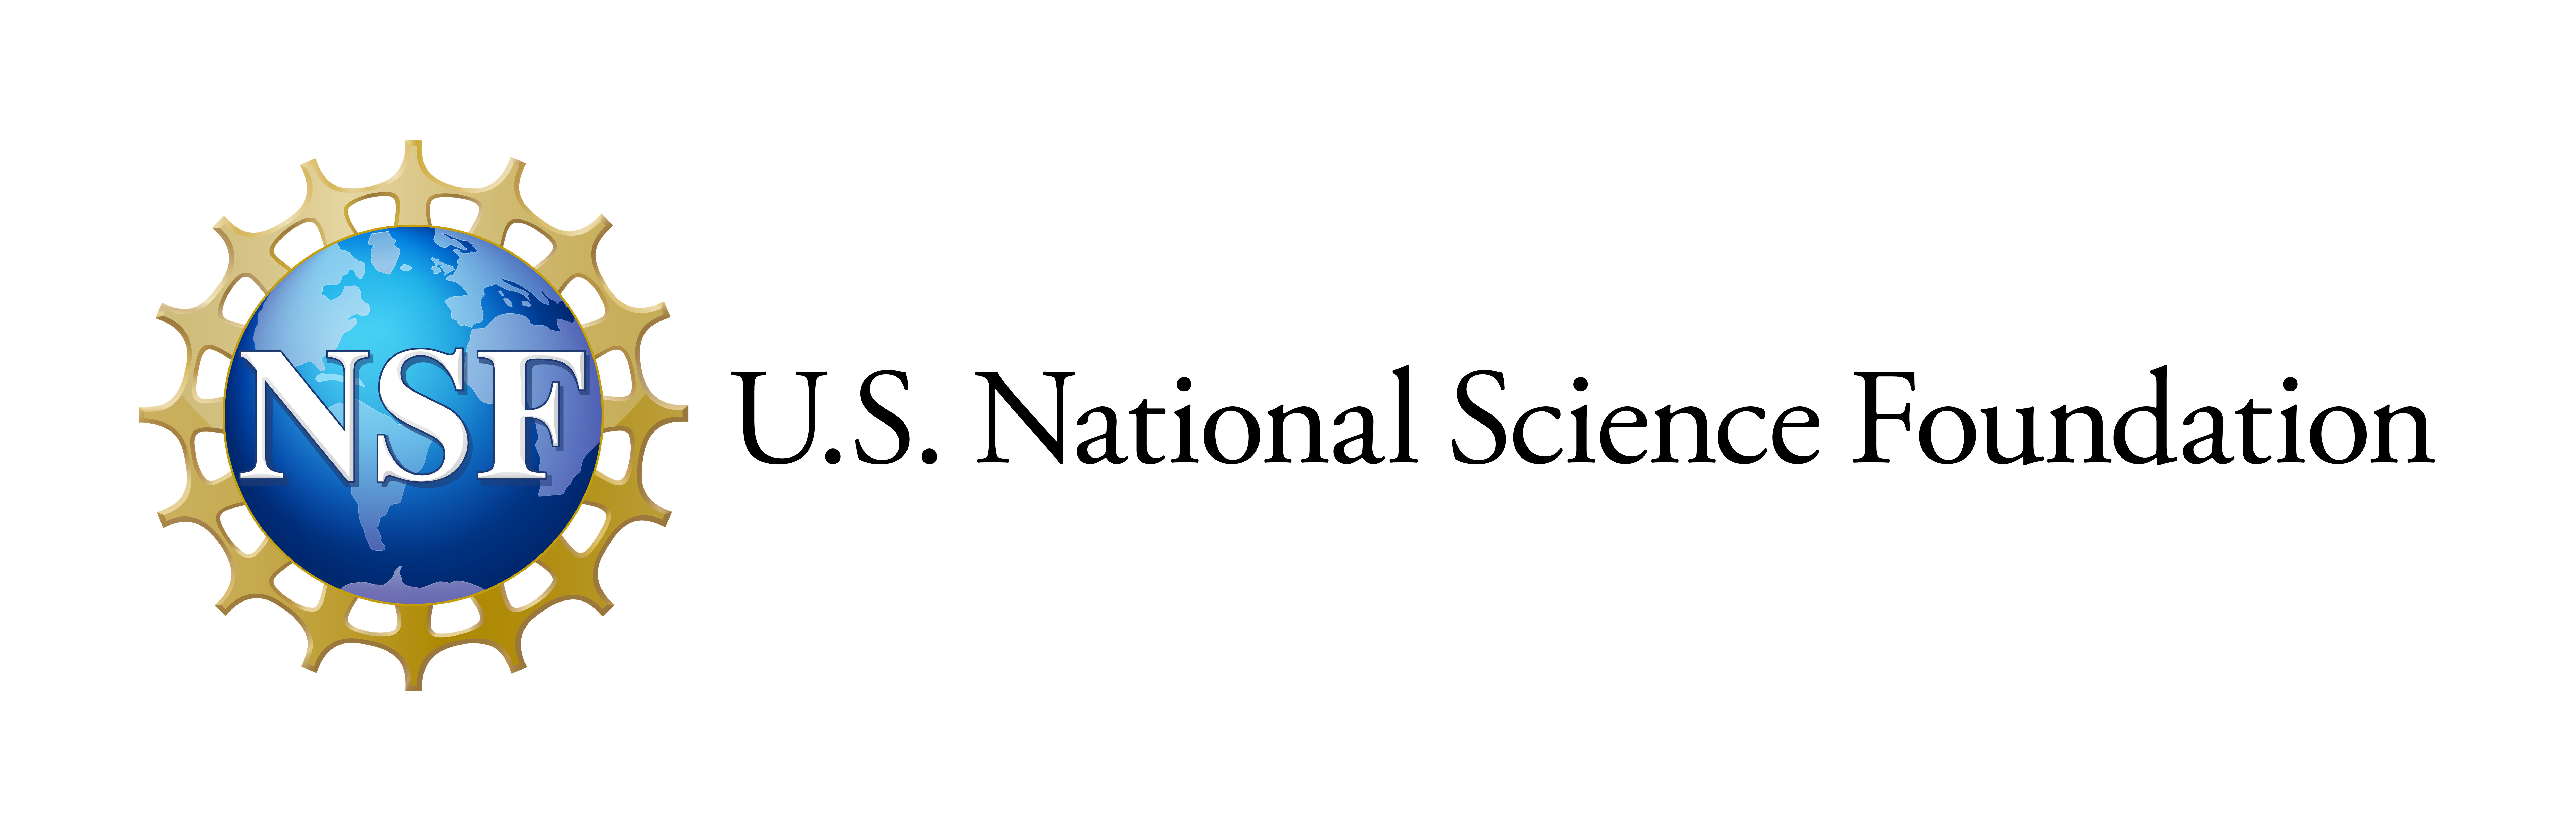 U.S. National Science Foundation Logo